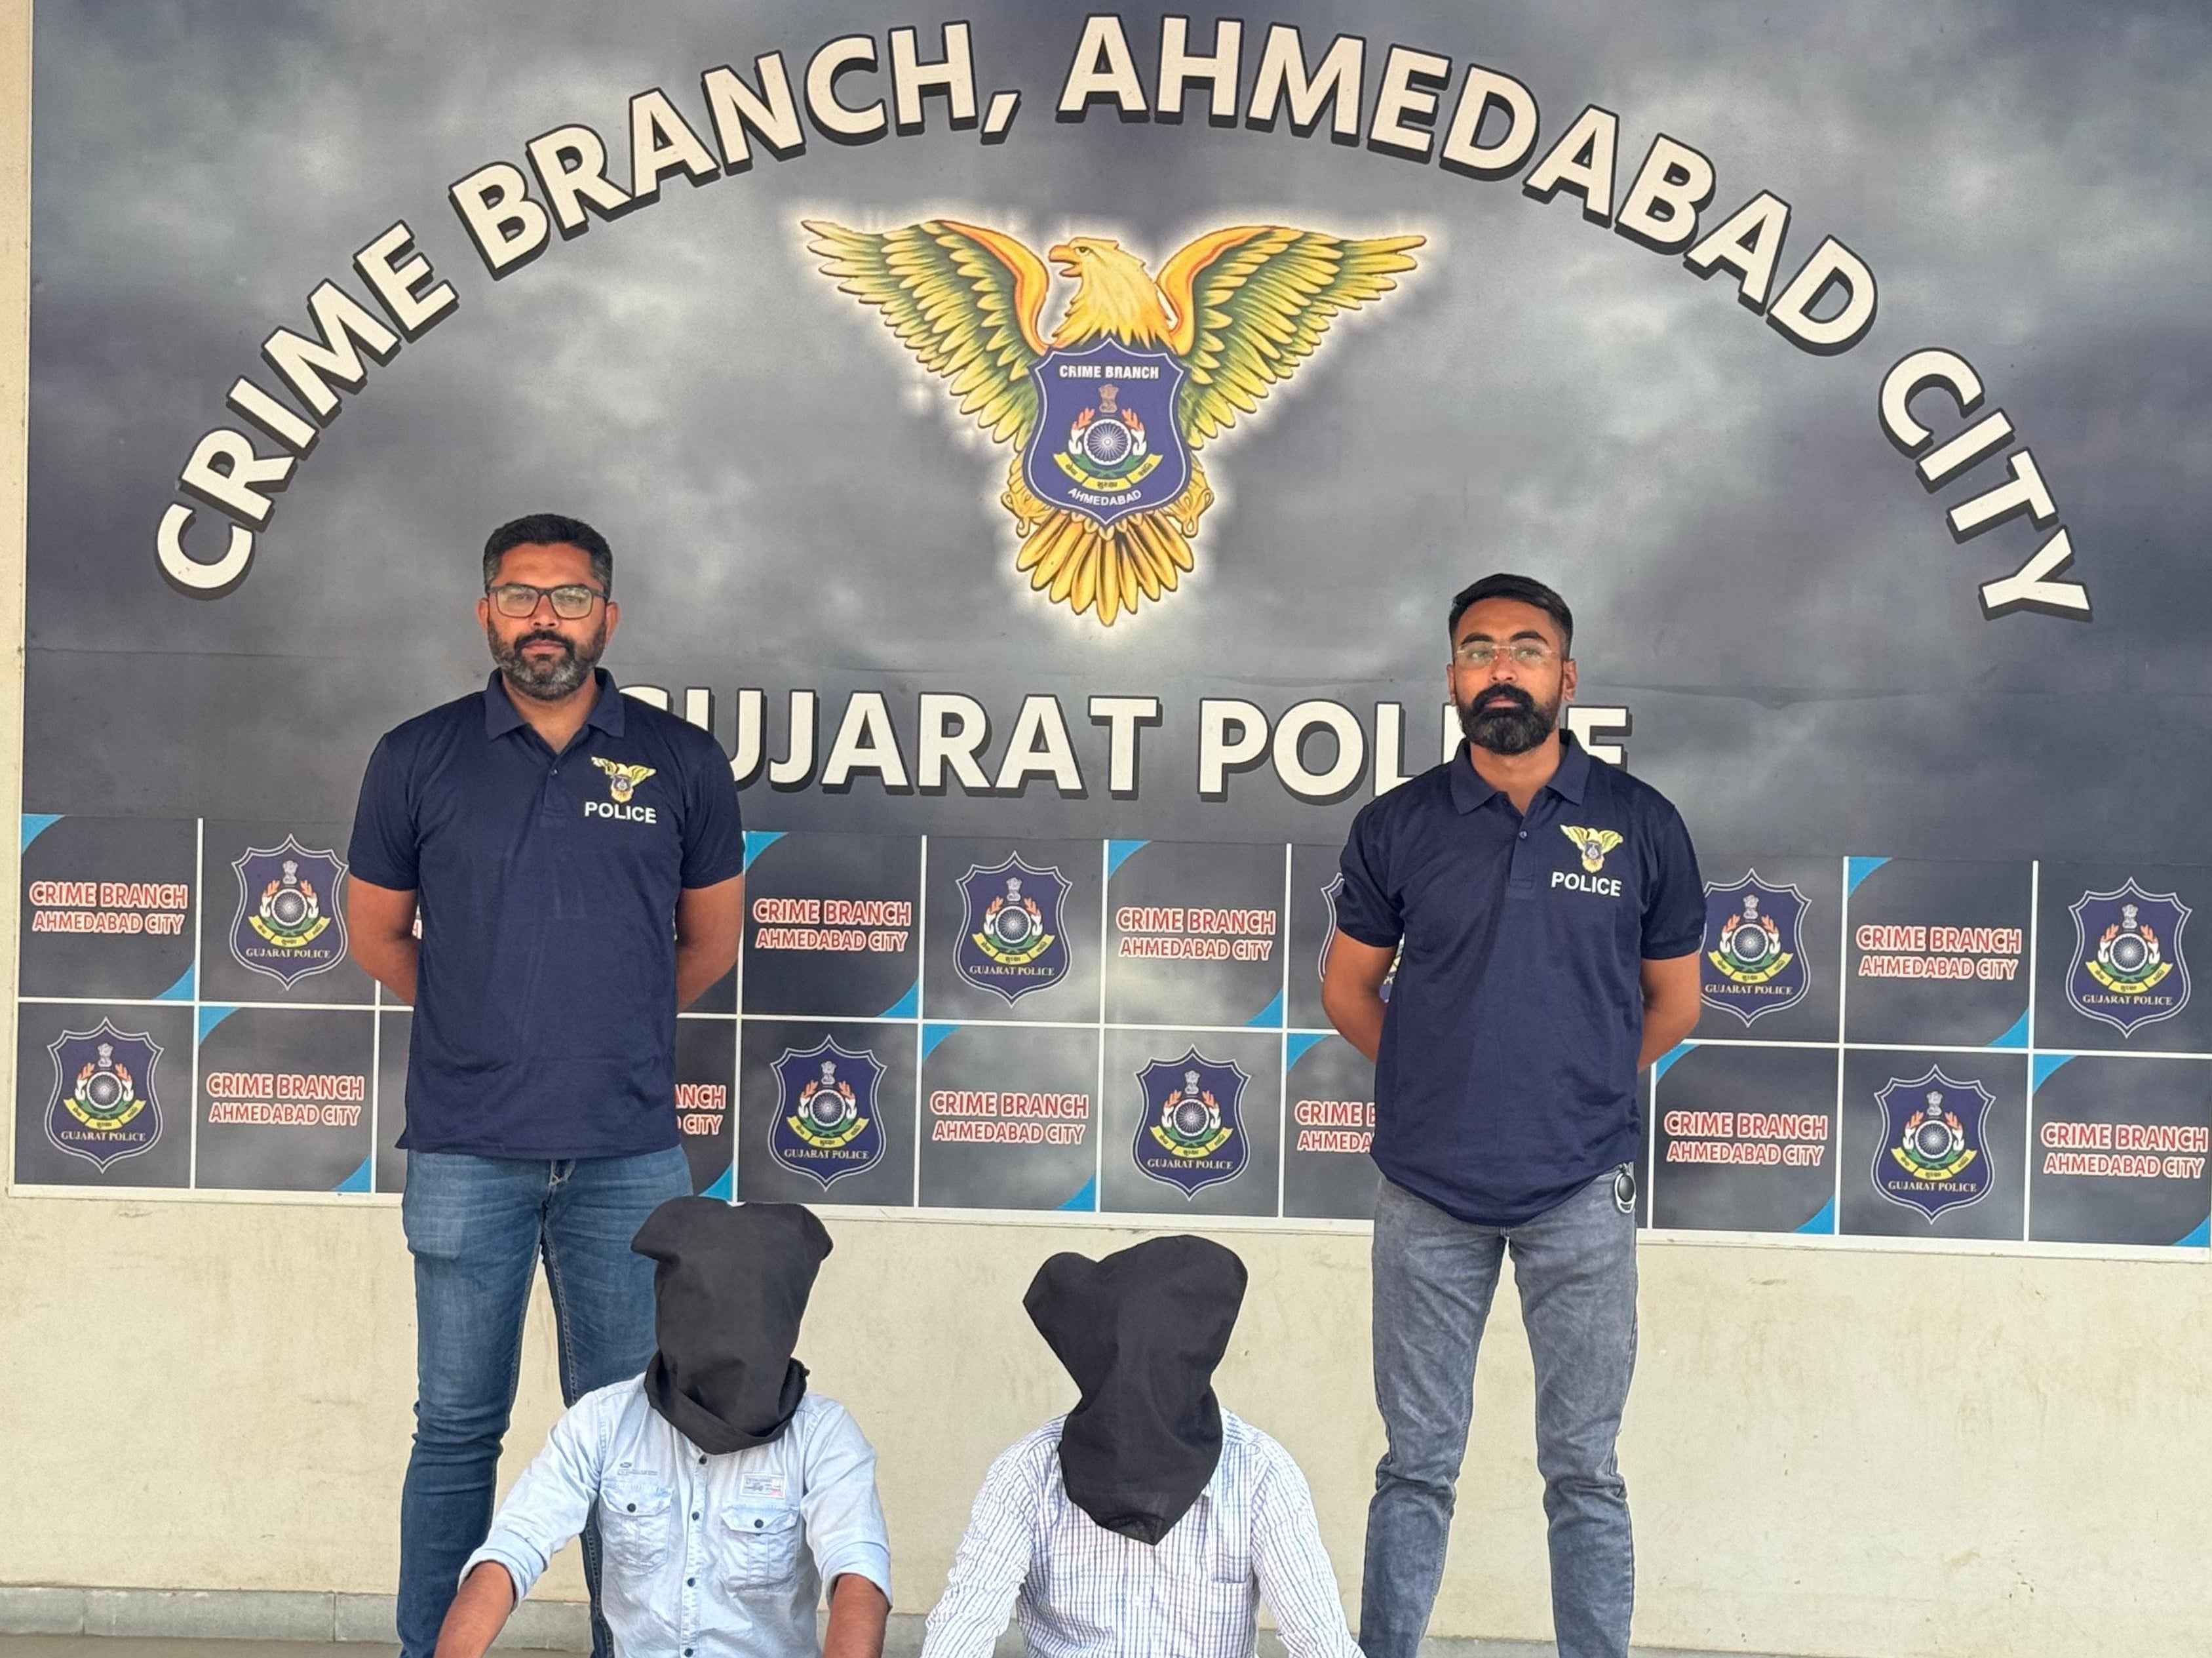 Two people, Hitesh Rakhubhai Mewada and Bharat Damodarbhai Patel, have been arrested in the case, Ahmedabad police said